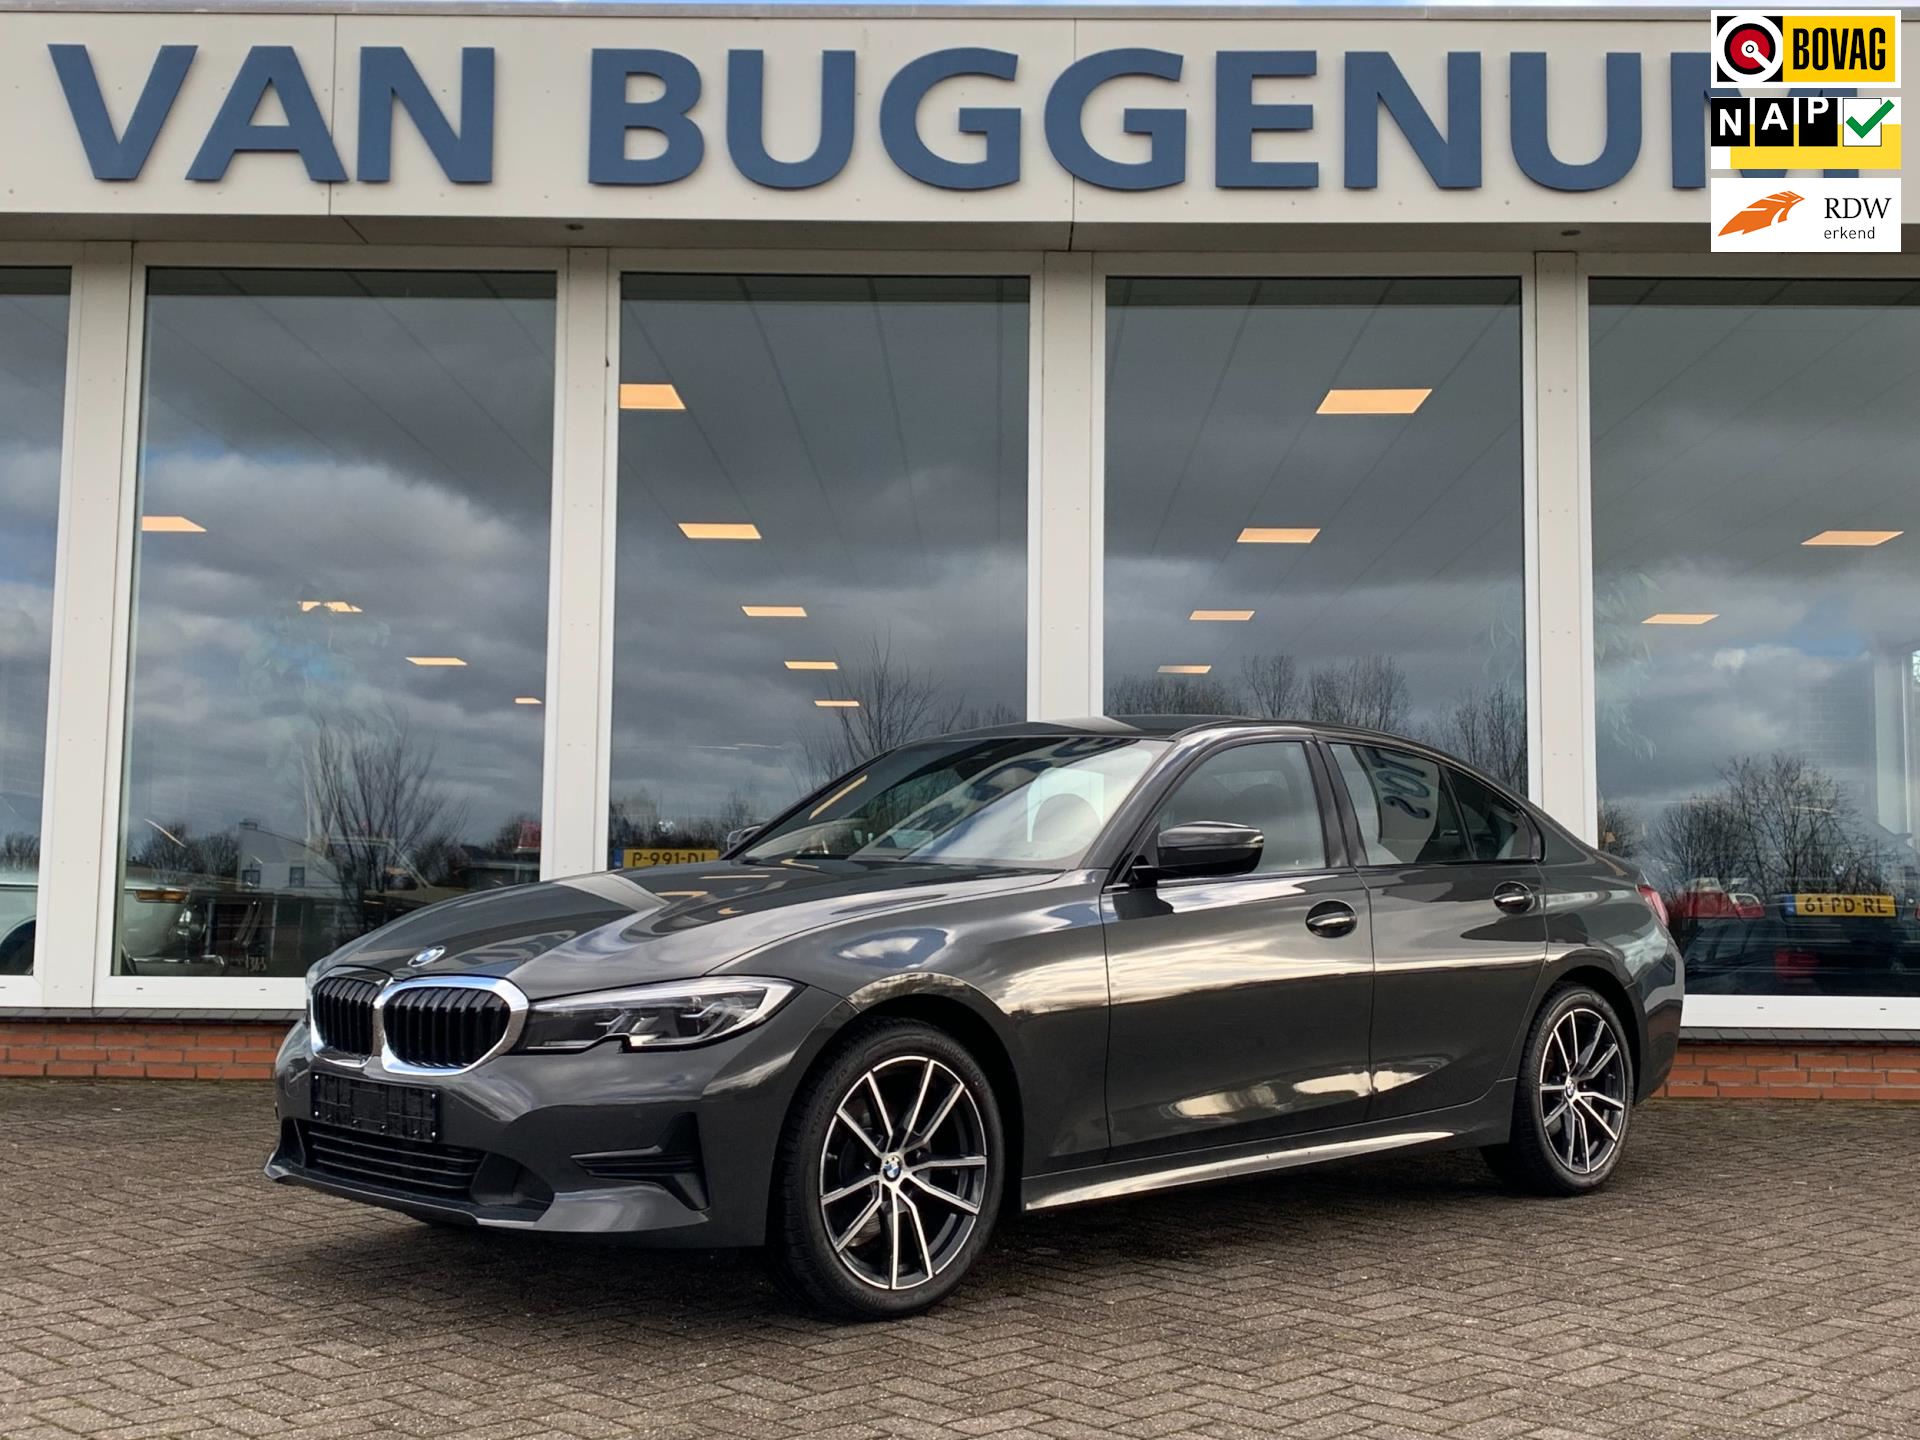 BMW 3-serie occasion - Automobielbedrijf J. van Buggenum